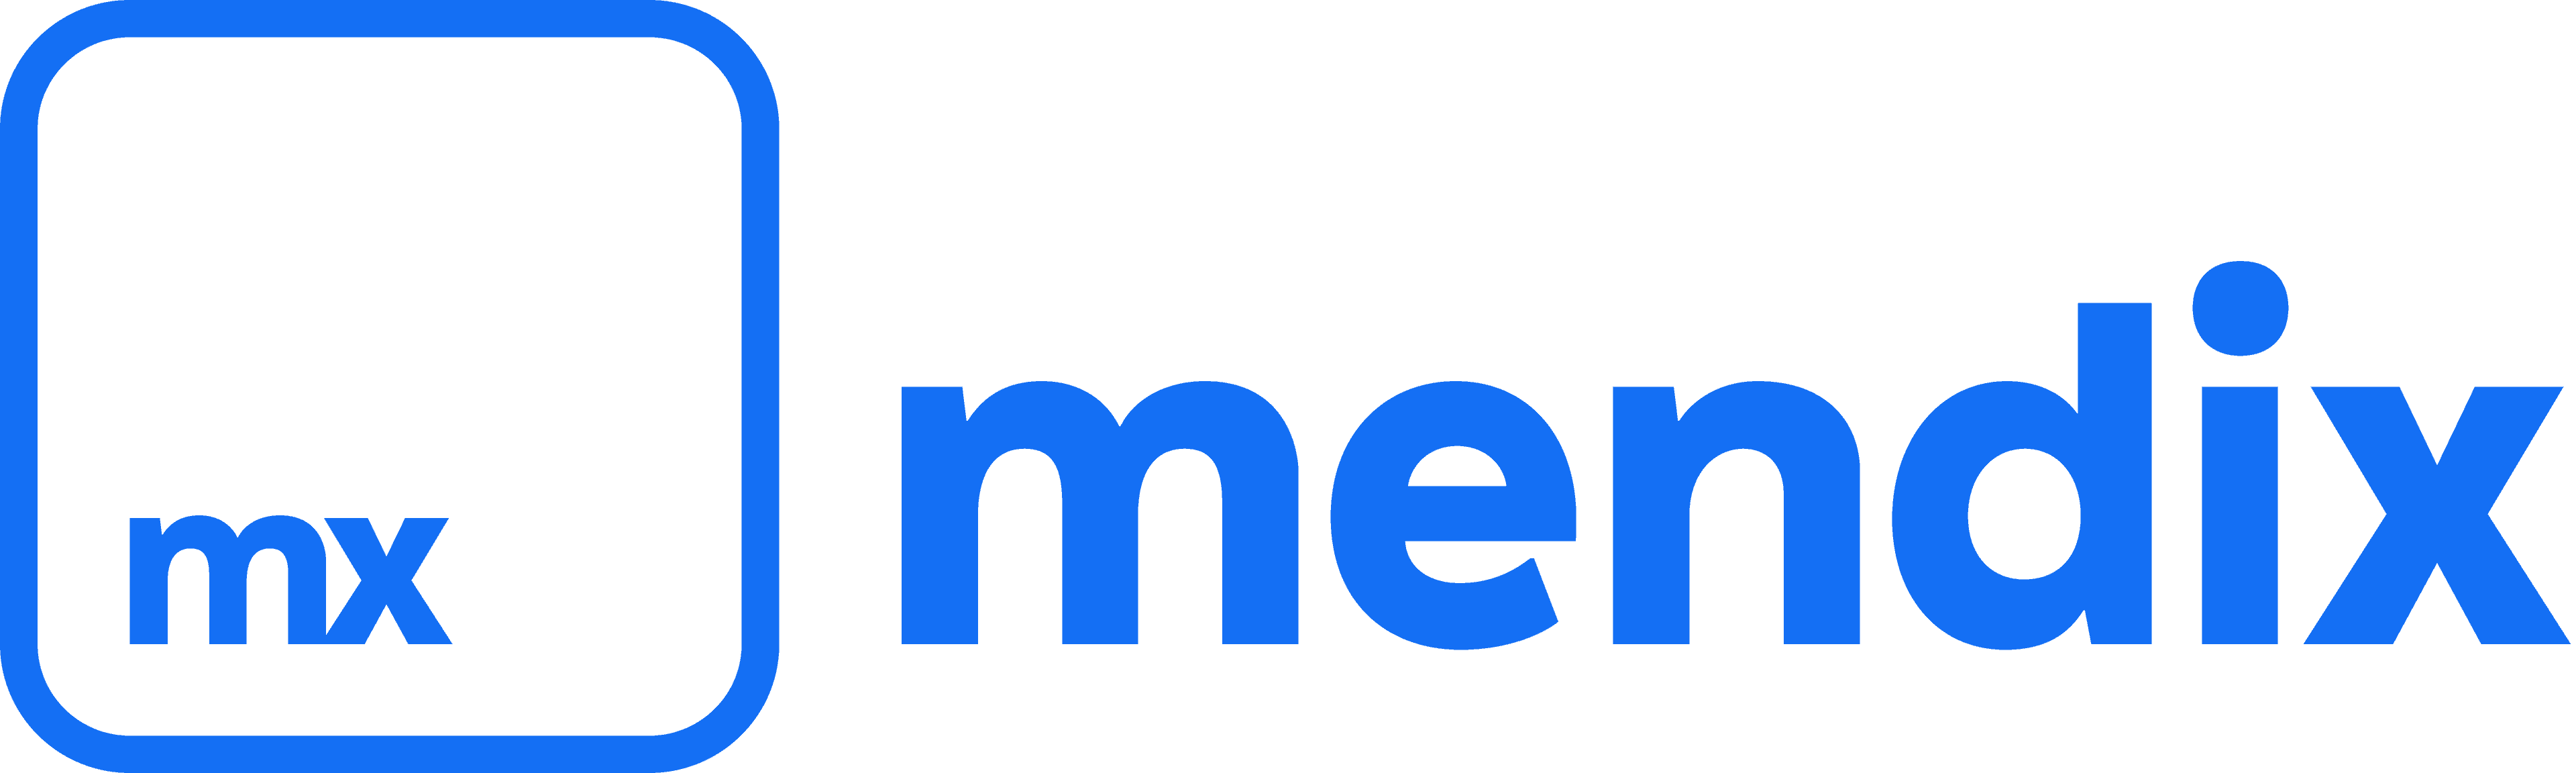 Mindex logo